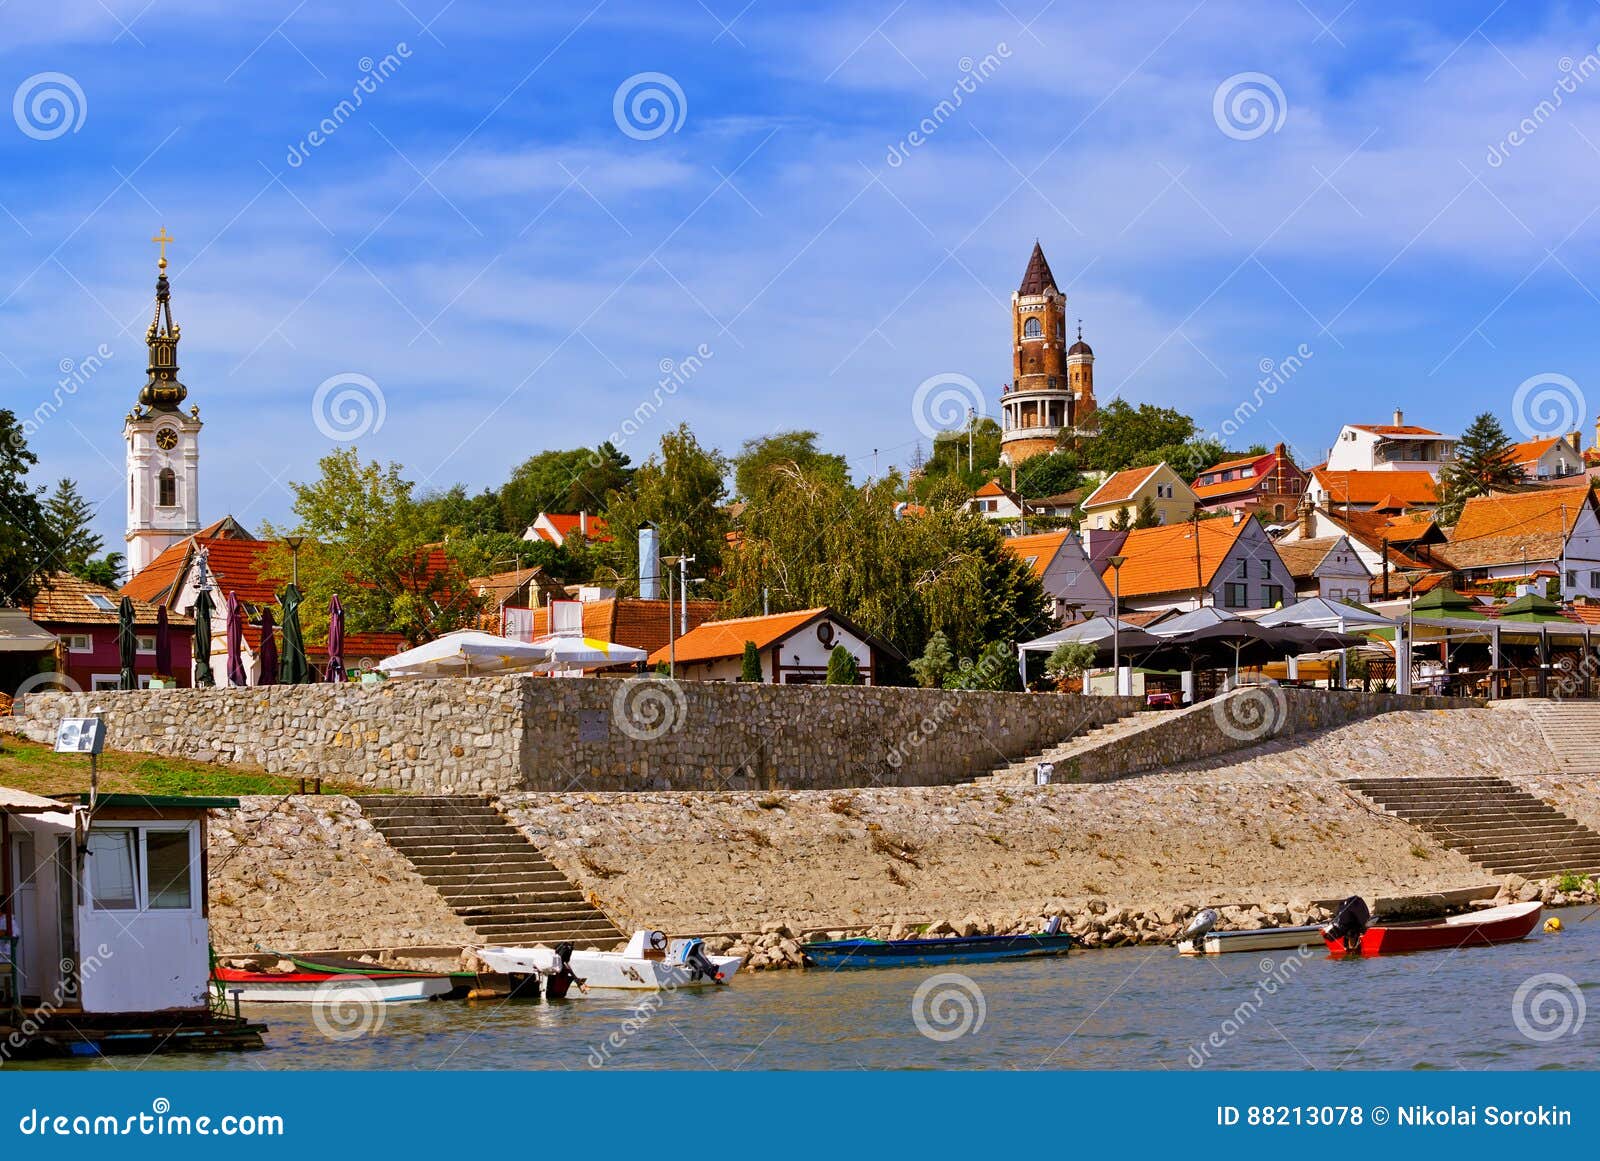 old town zemun - belgrade serbia